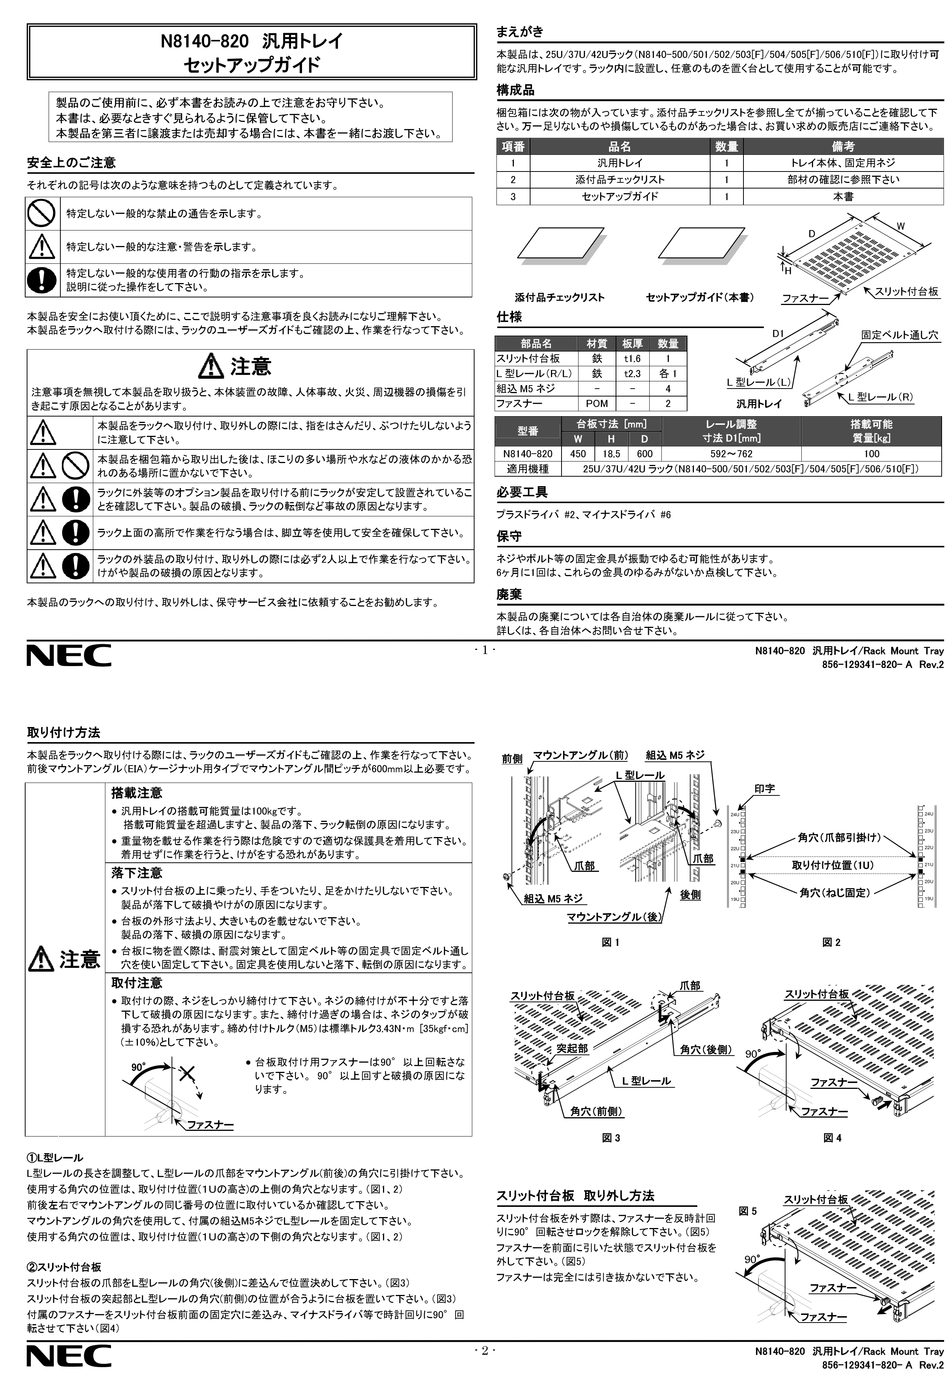 NEC N8140-820 SETUP MANUAL Pdf Download | ManualsLib